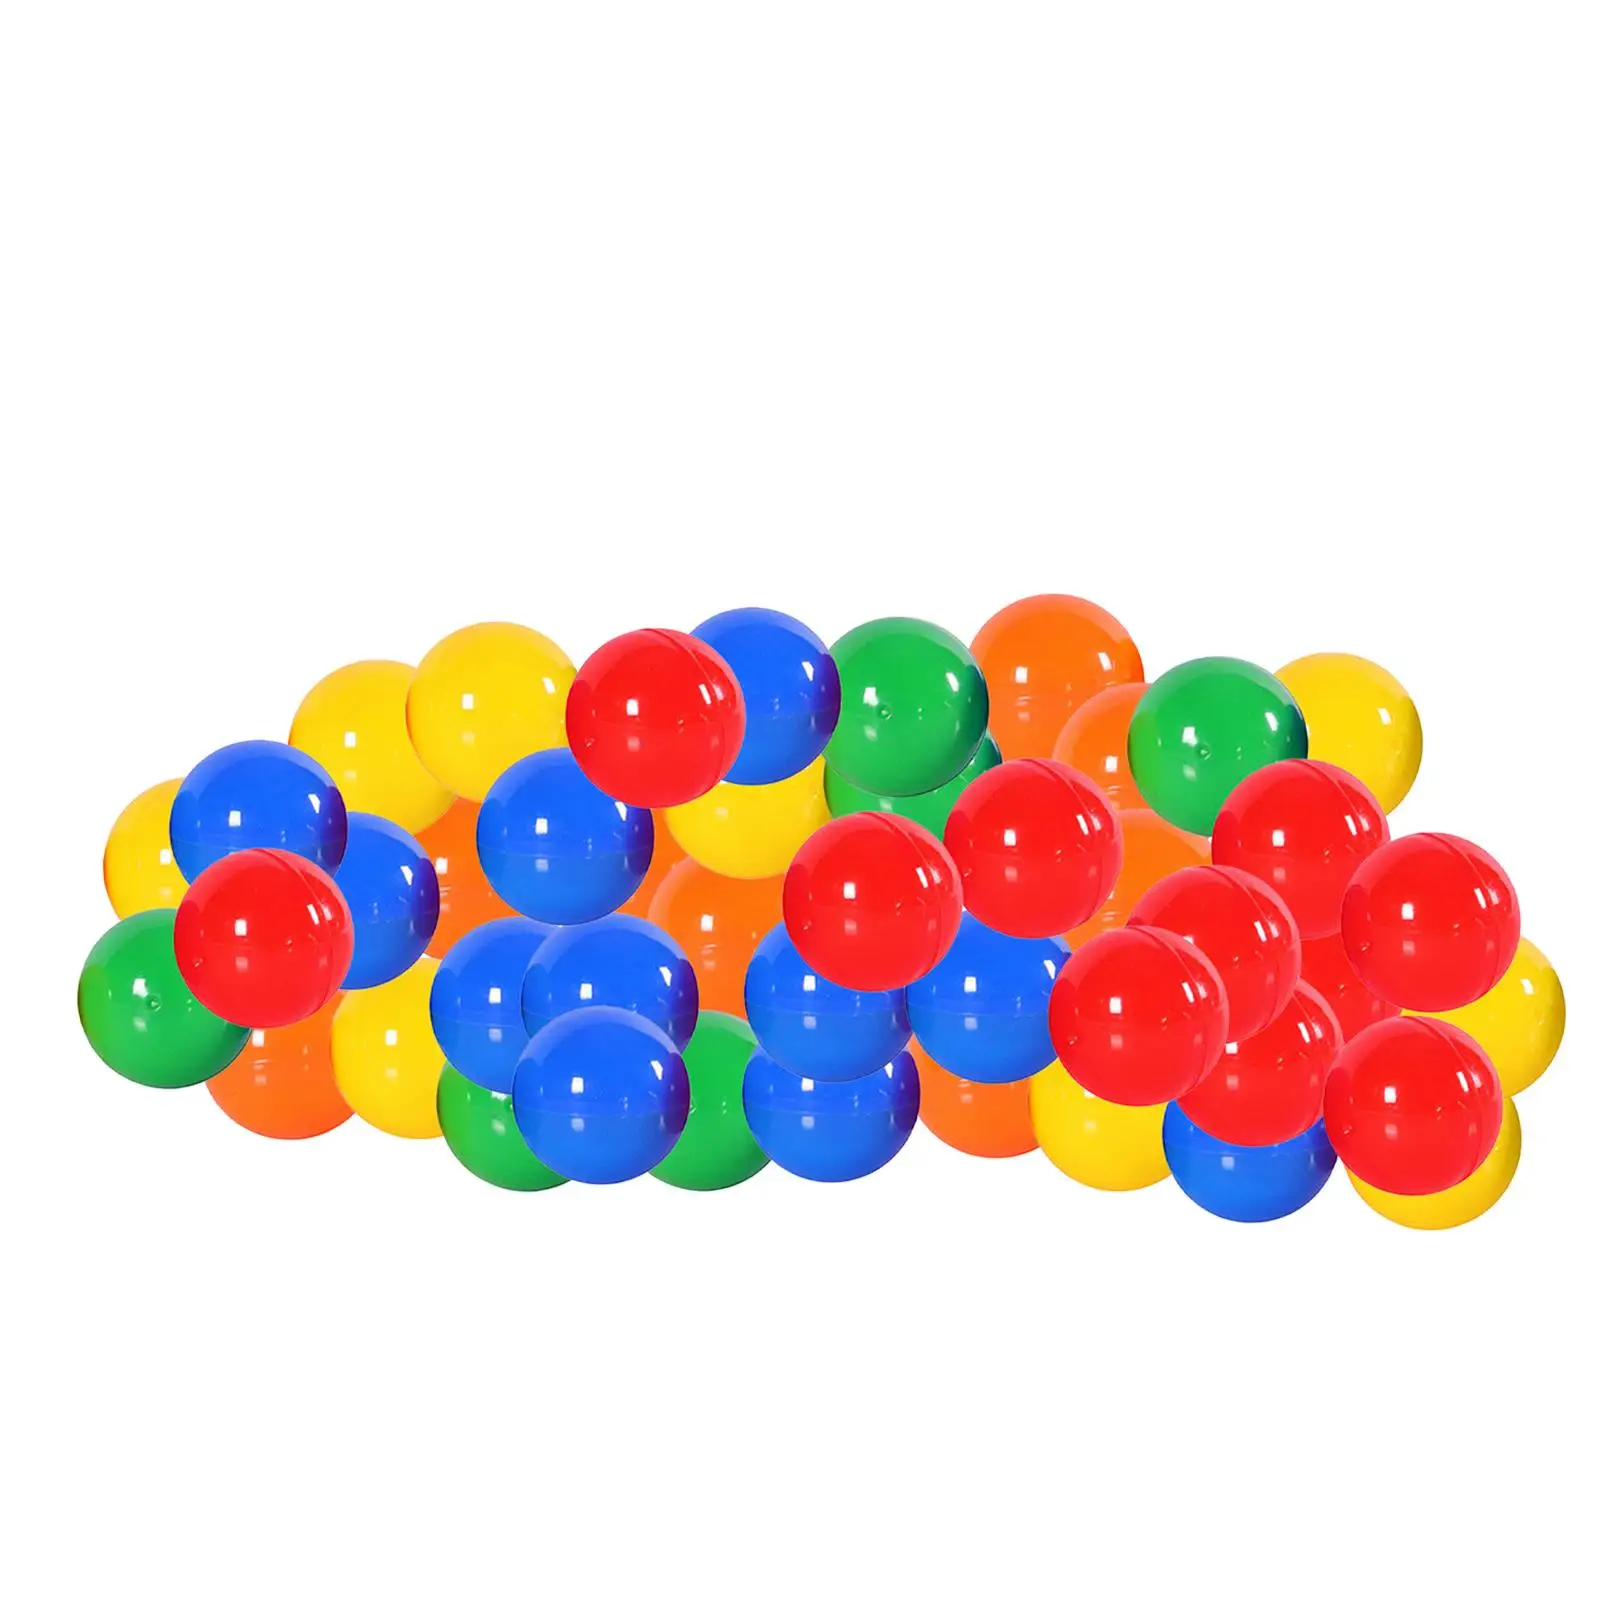 50Pcs Bingo Ball Opening Replacement Accs Durable Universal Lottery Balls Raffle